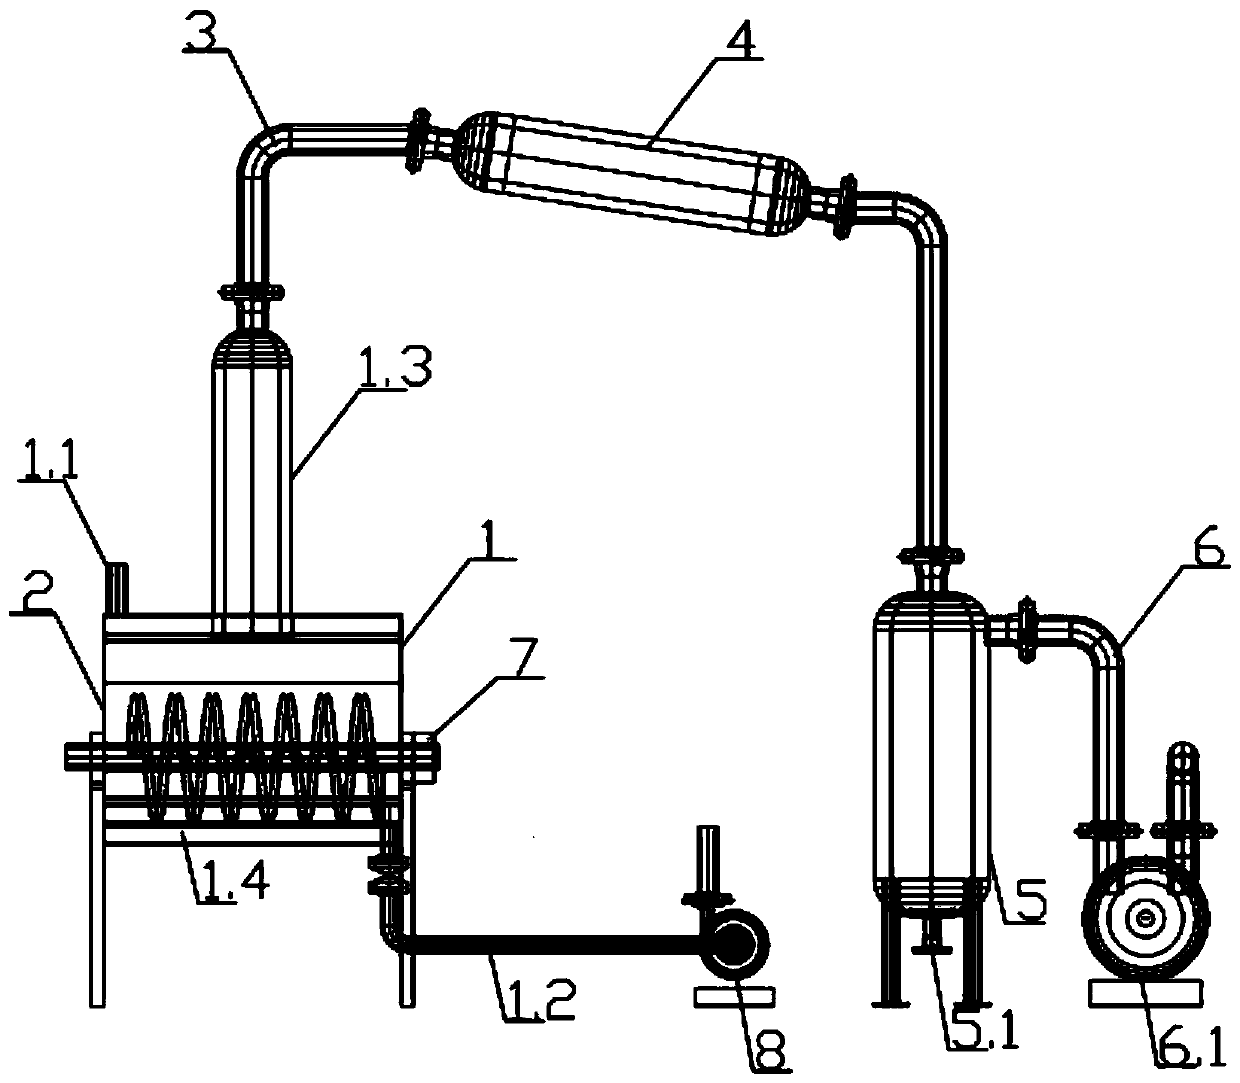 Hollow spiral-blade heating thin-film evaporator and evaporation method